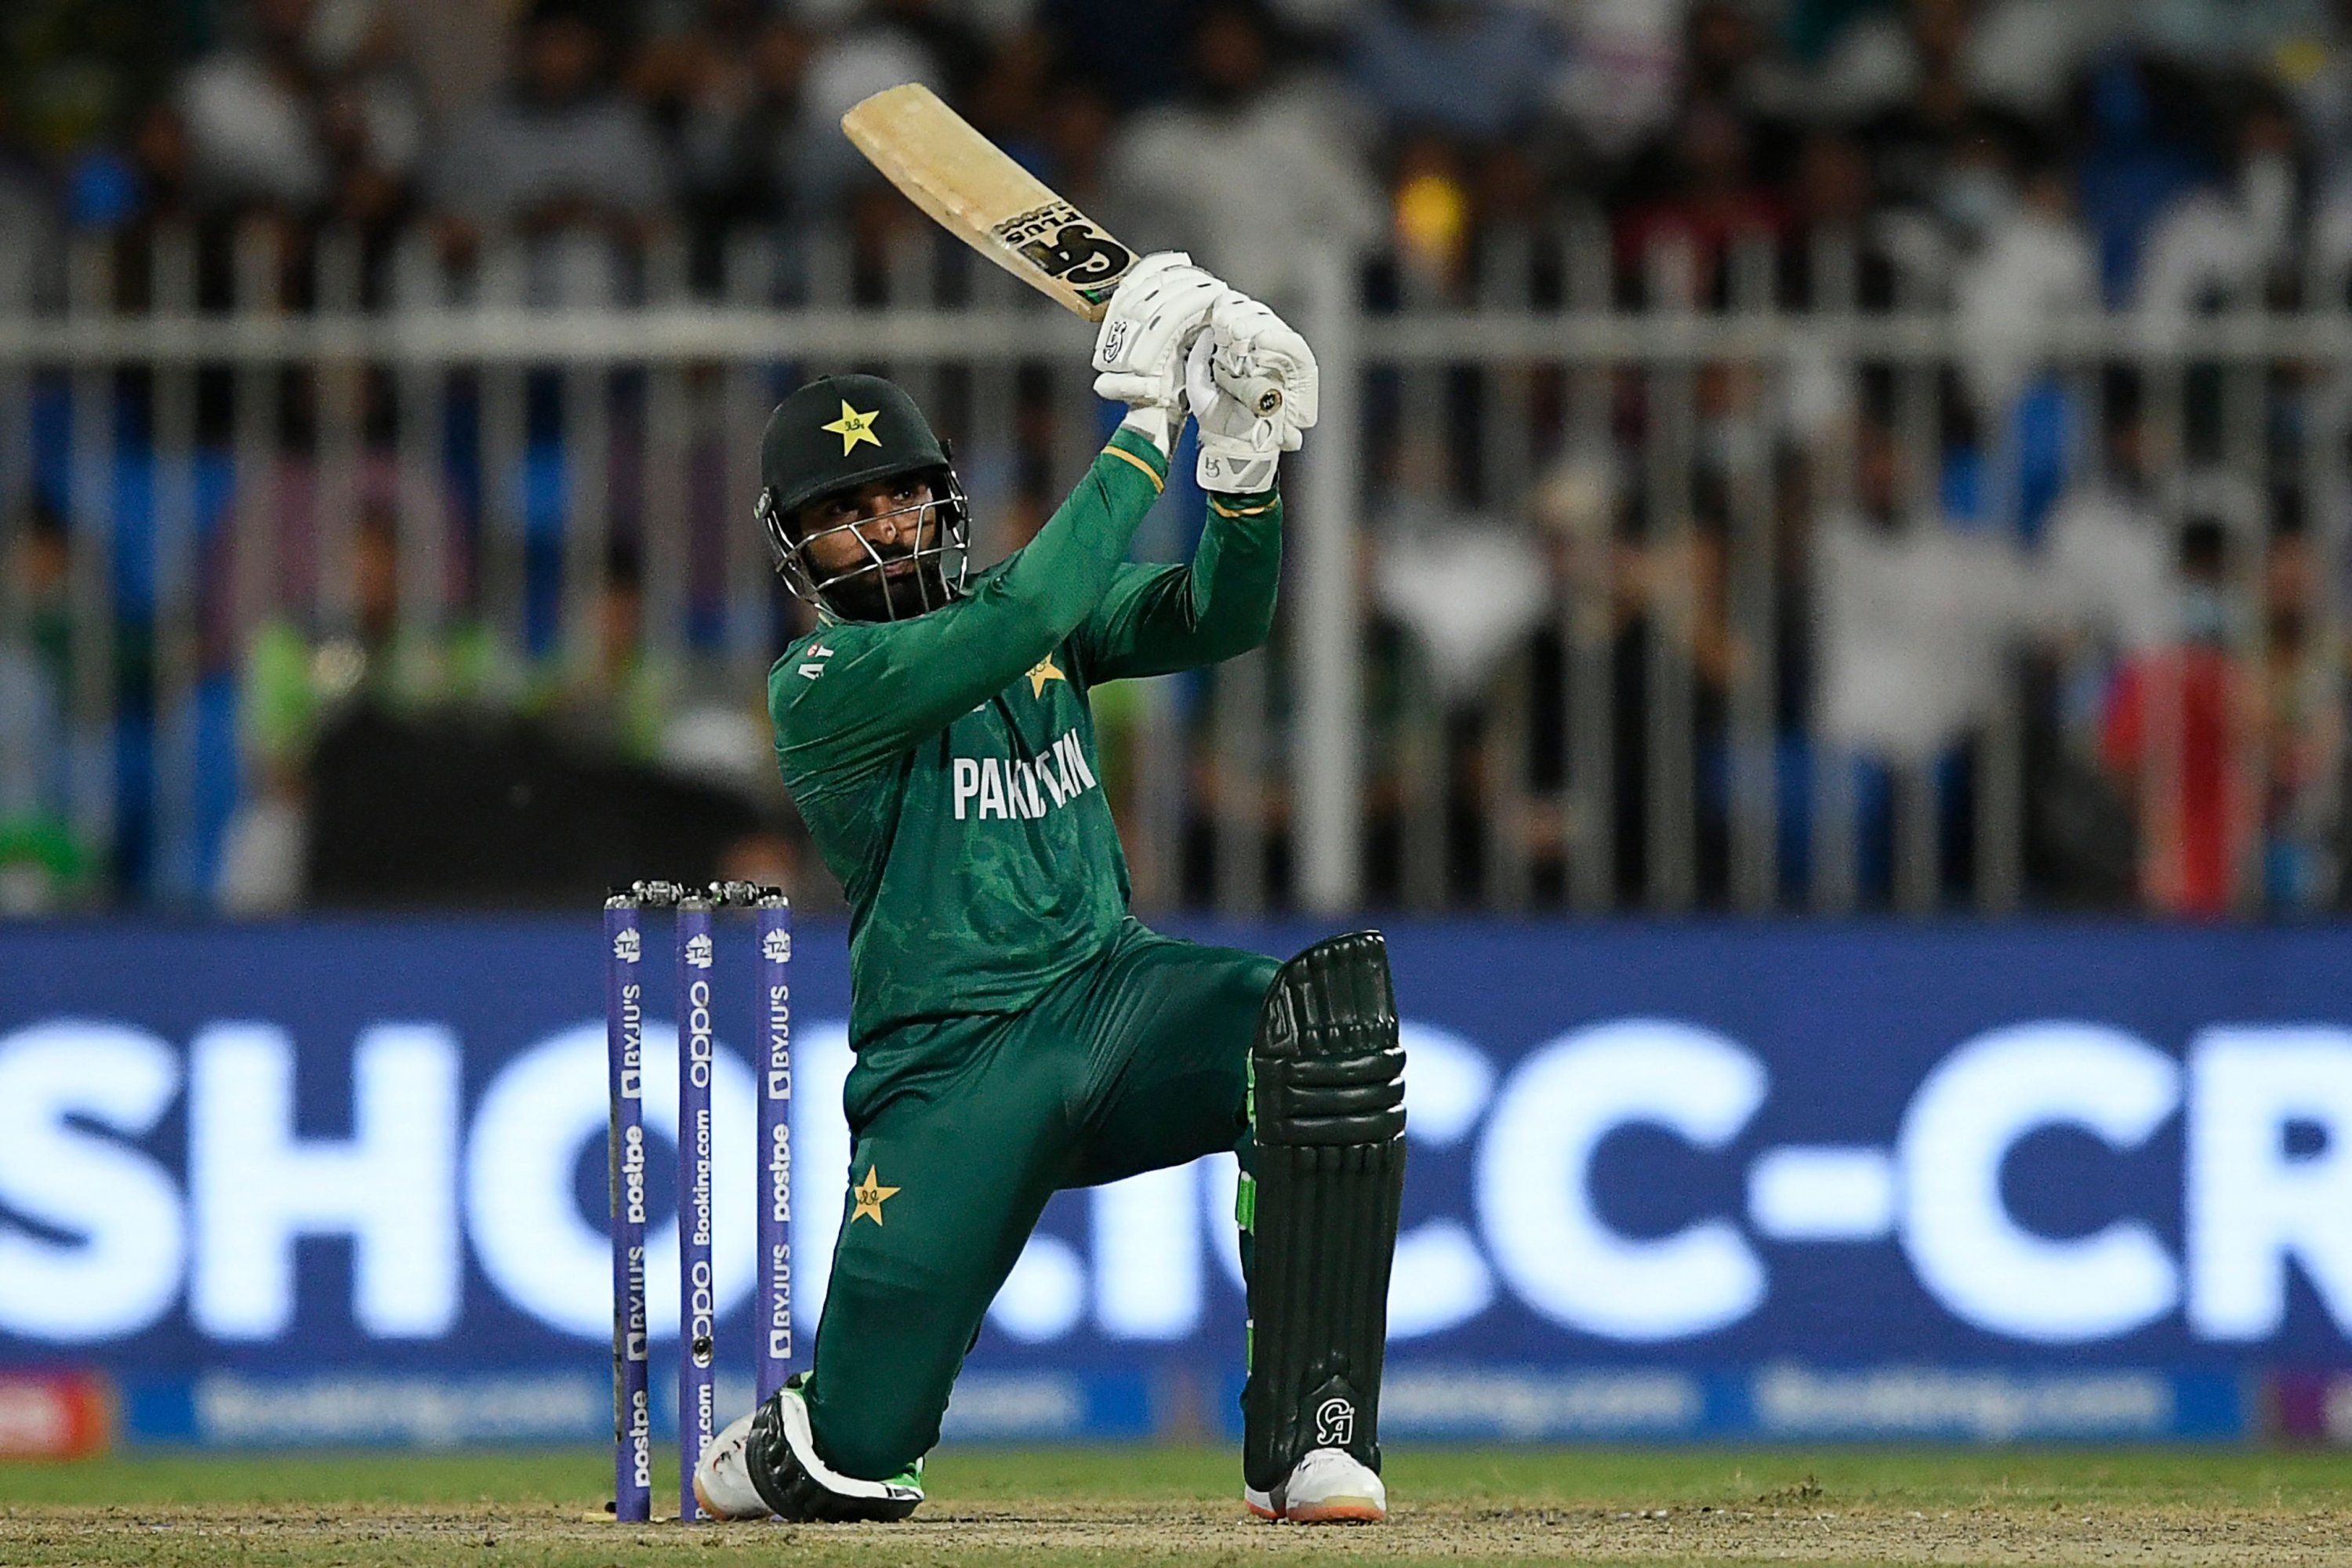 Asif Ali dari Pakistan melakukan pukulan selama pertandingan kriket Piala Dunia T20 putra ICC melawan Skotlandia, Sharjah, UEA, 7 November 2021. (AFP Photo)